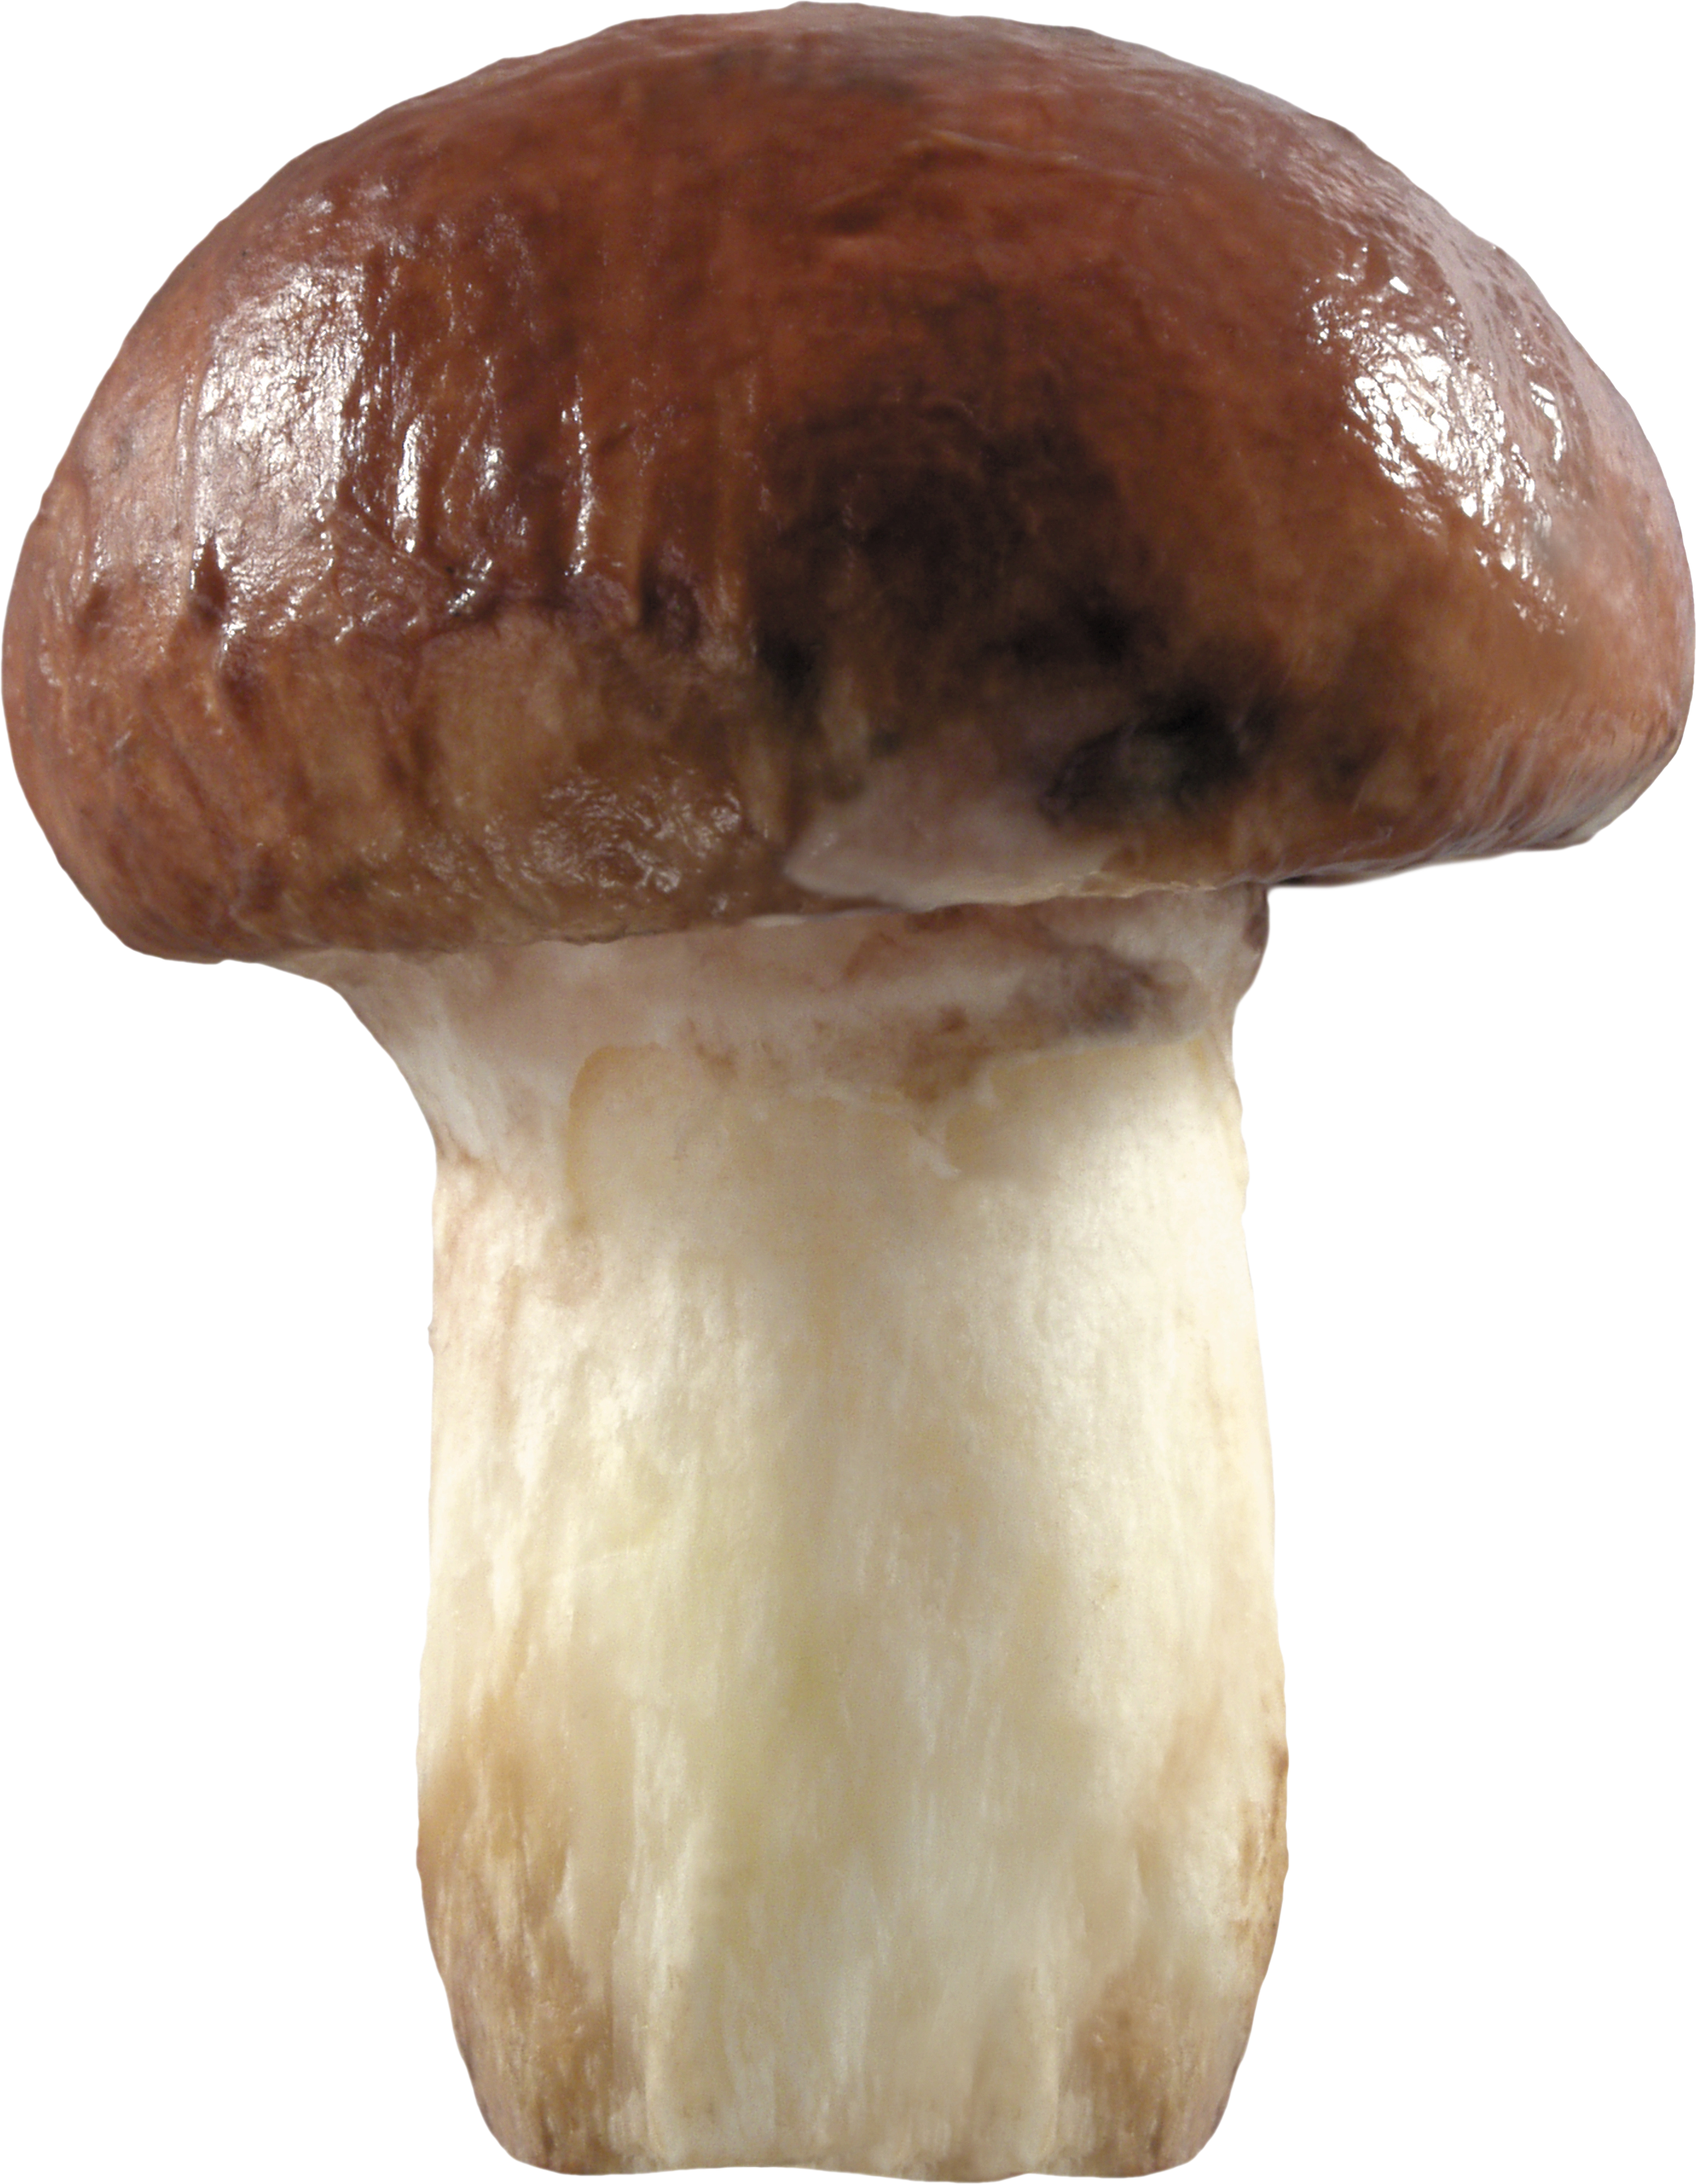 Big Mushroom PNG Image